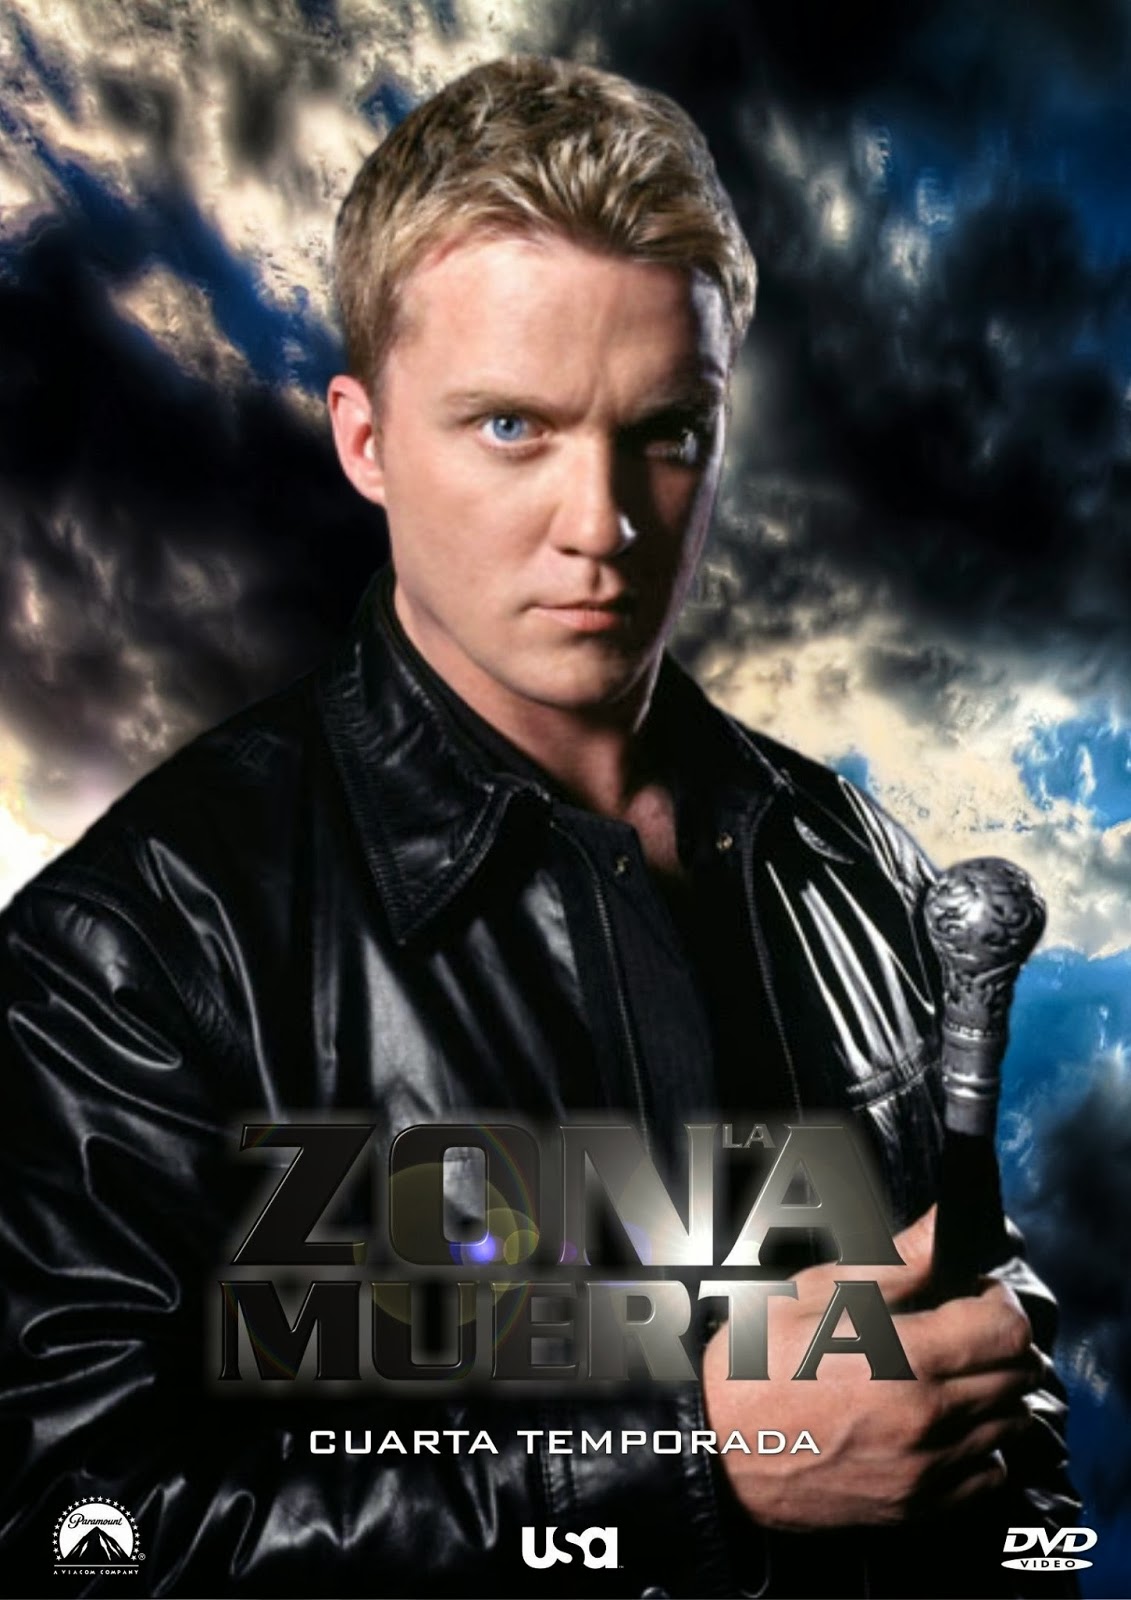 La Zona Muerta - Temporada 4 - Audio Latino - (2005)